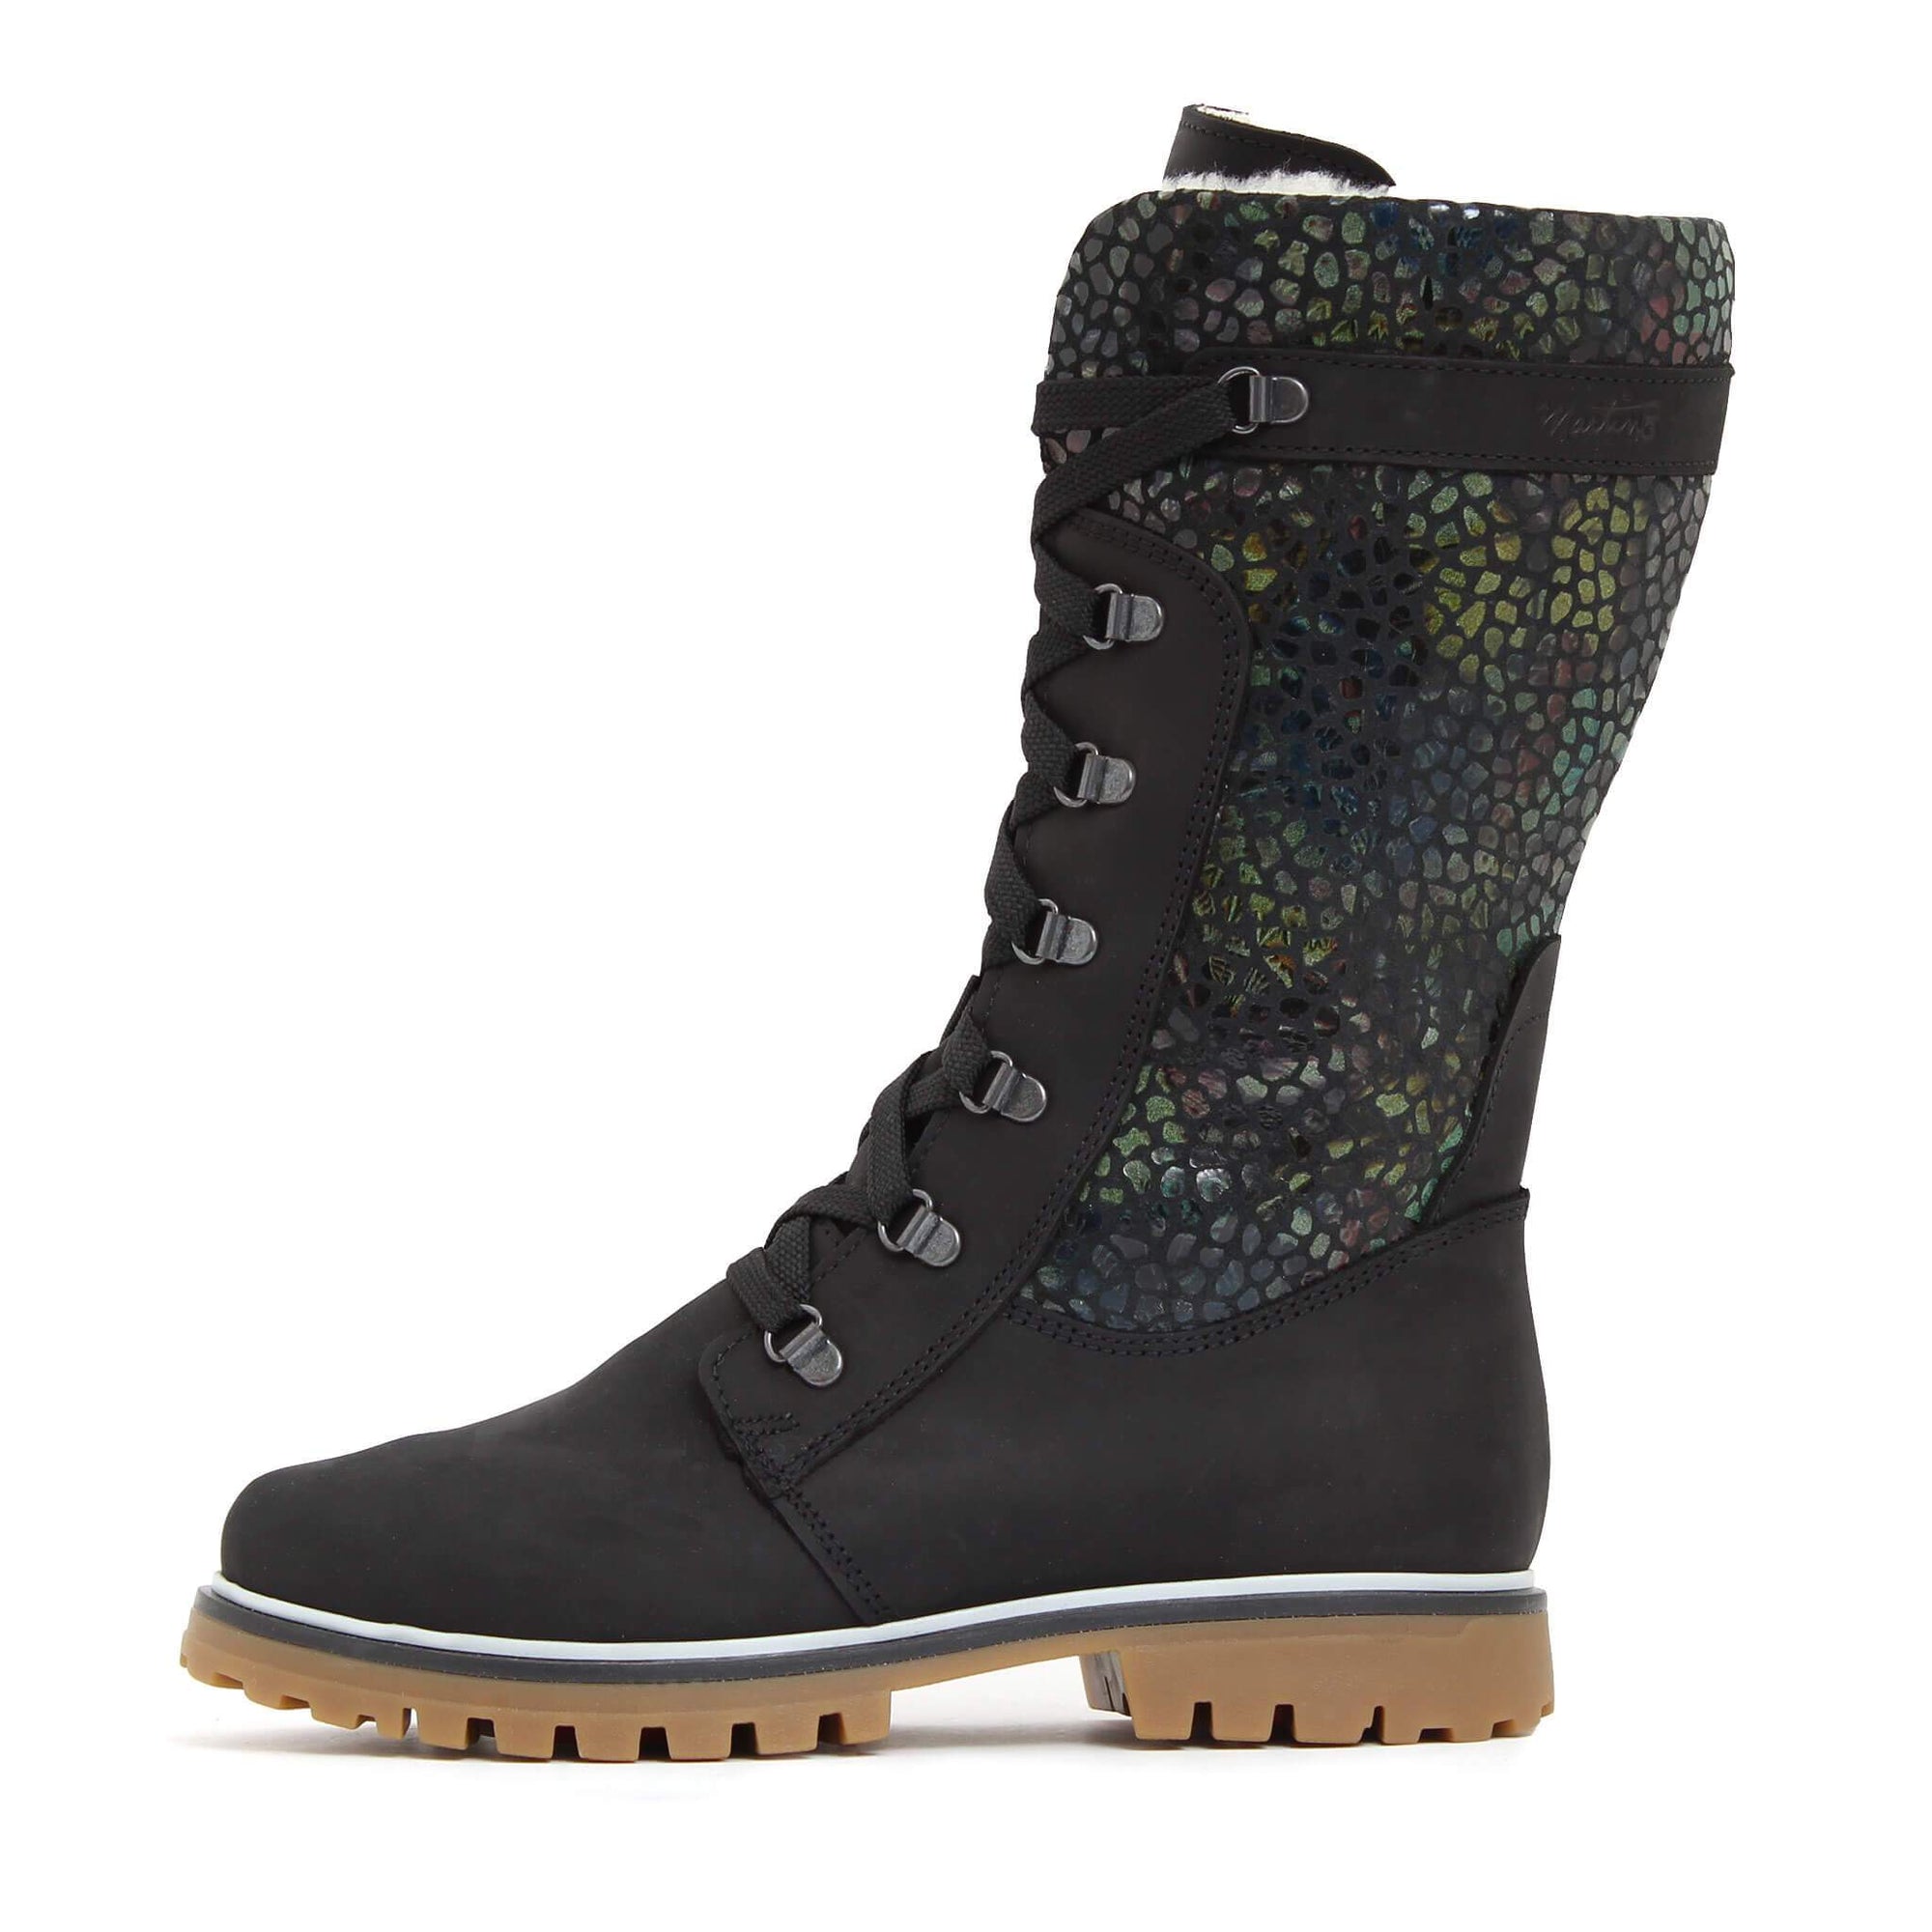 Marlee winter boot for women - Black-croco